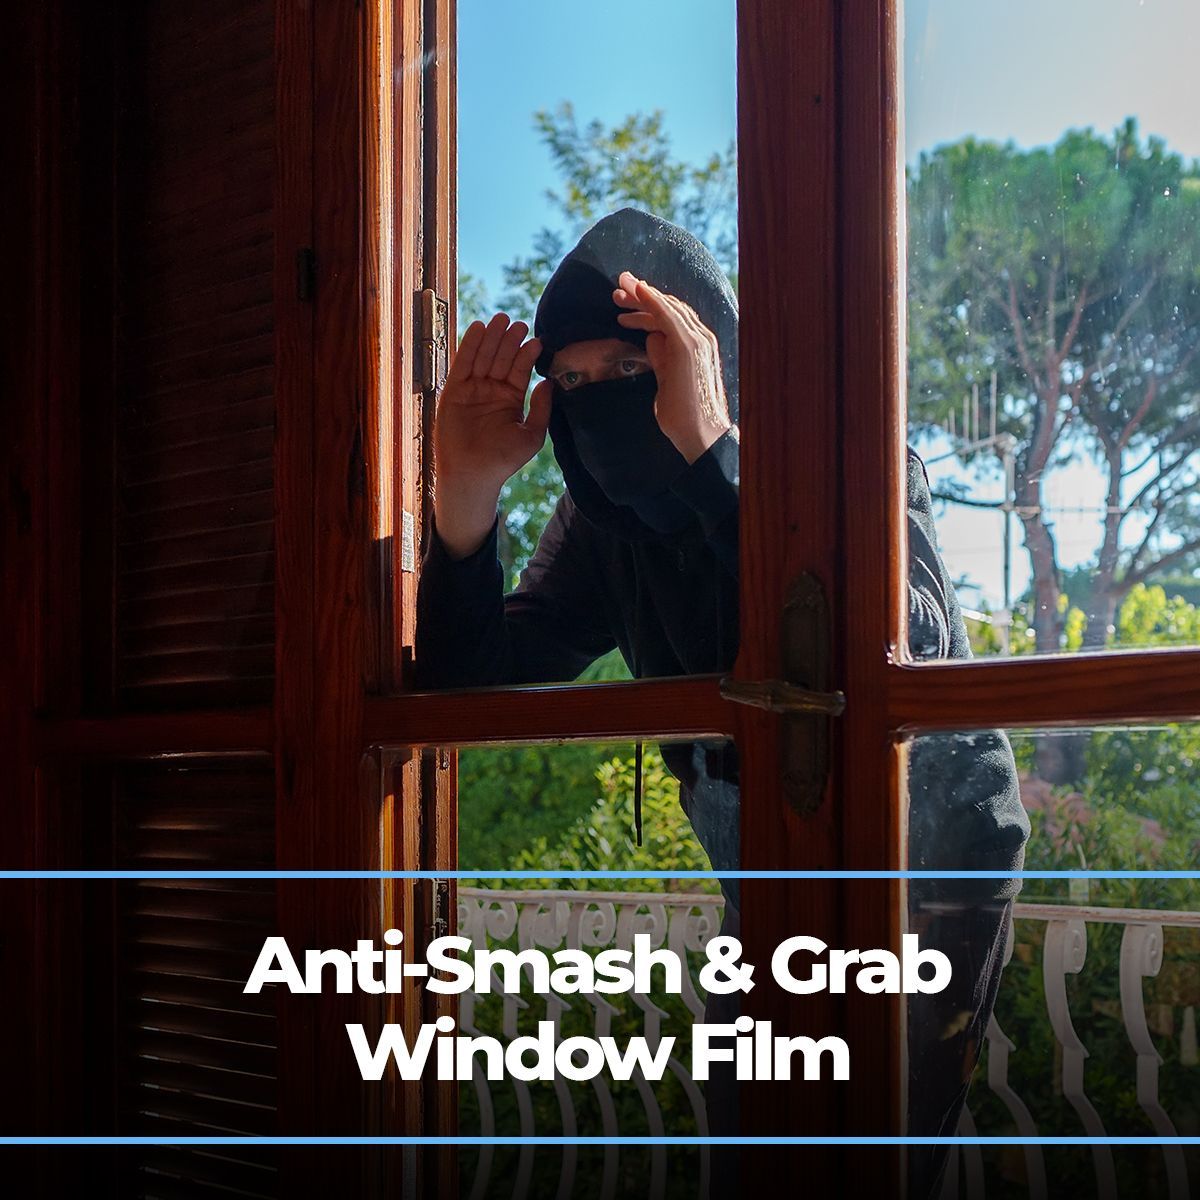 Anti-Smash & Grab Window Film